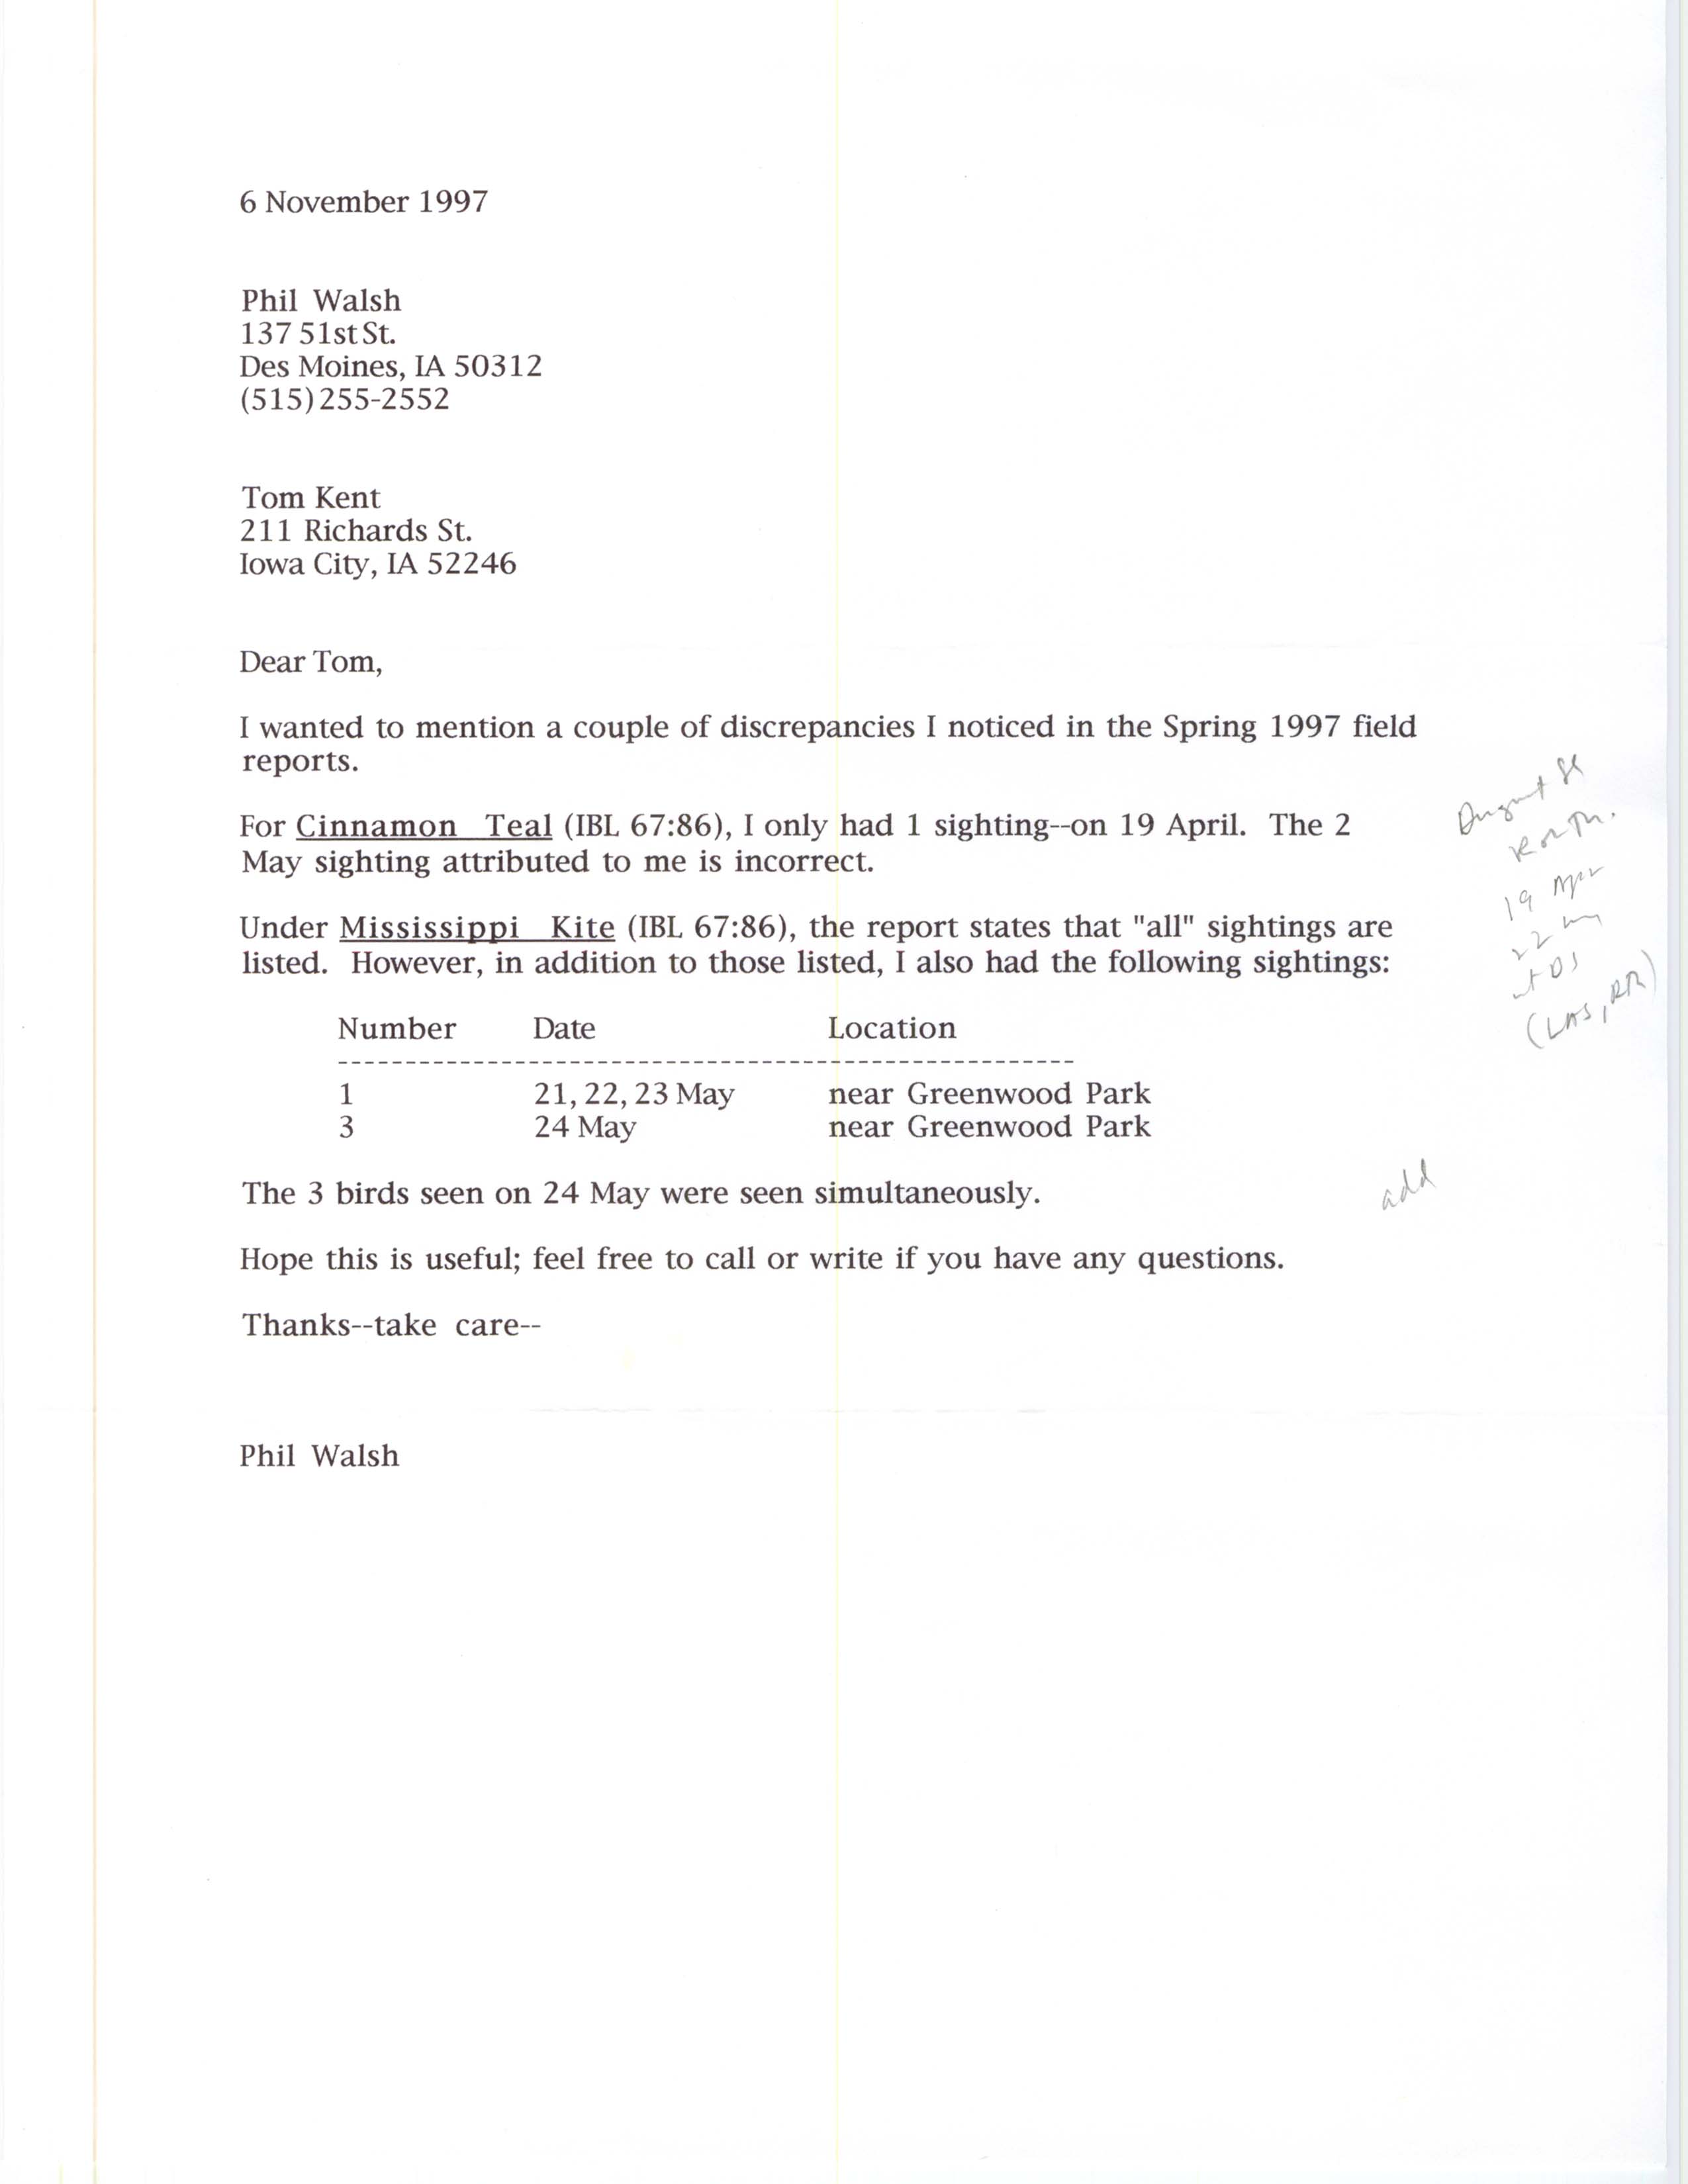 Philip J. Walsh letter to Thomas H. Kent regarding discrepancies in the spring 1997 field reports, November 6, 1997